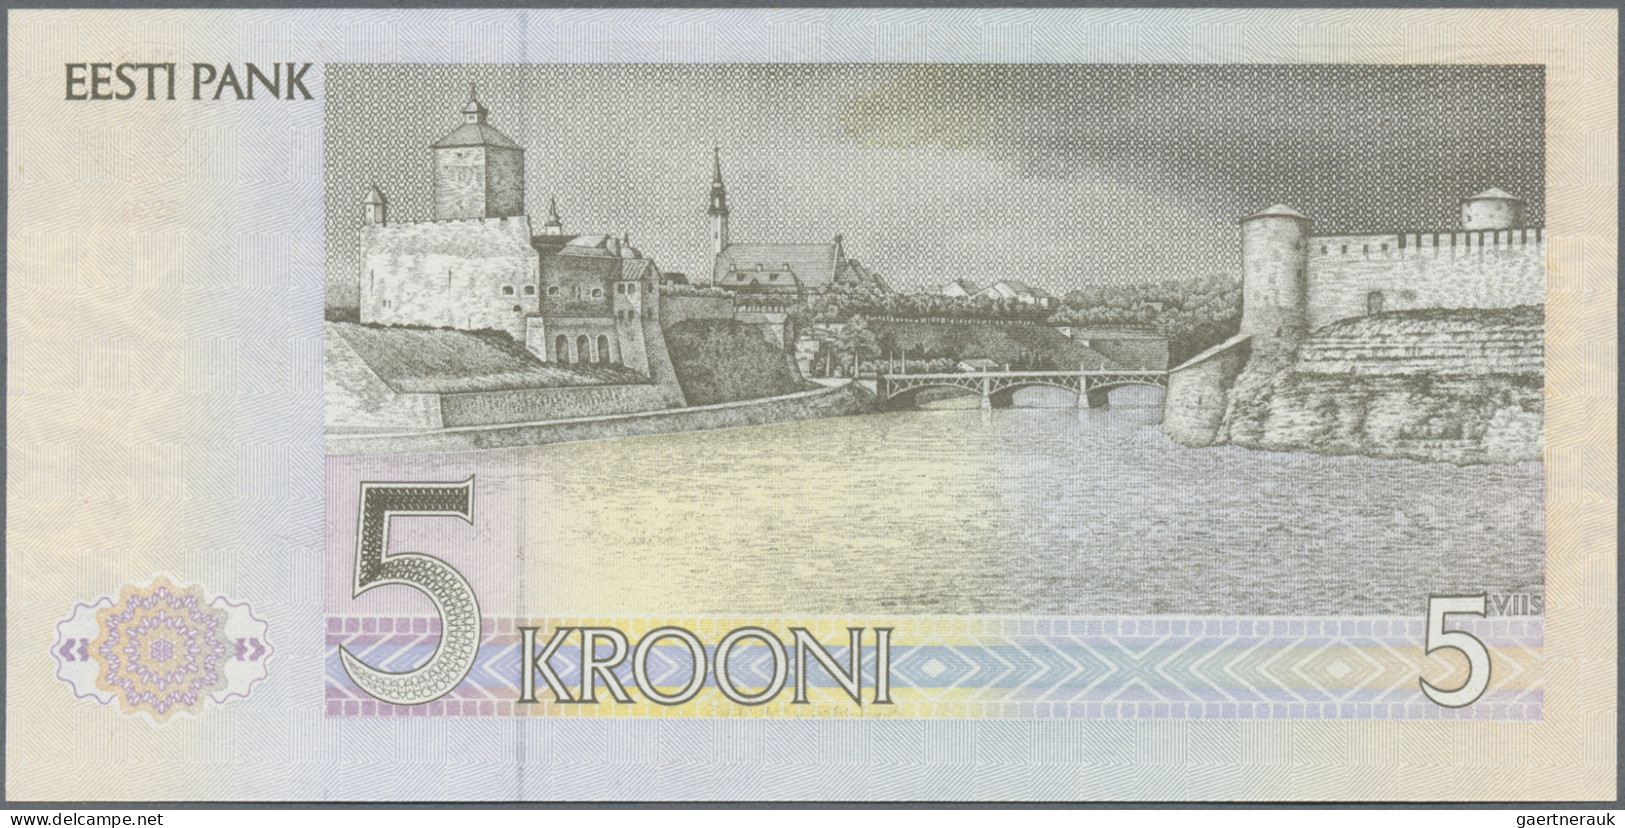 Estonia: Eesti Pank, set with 7 banknotes, series 1991-1992, with 1, 2, 5, 10, 2